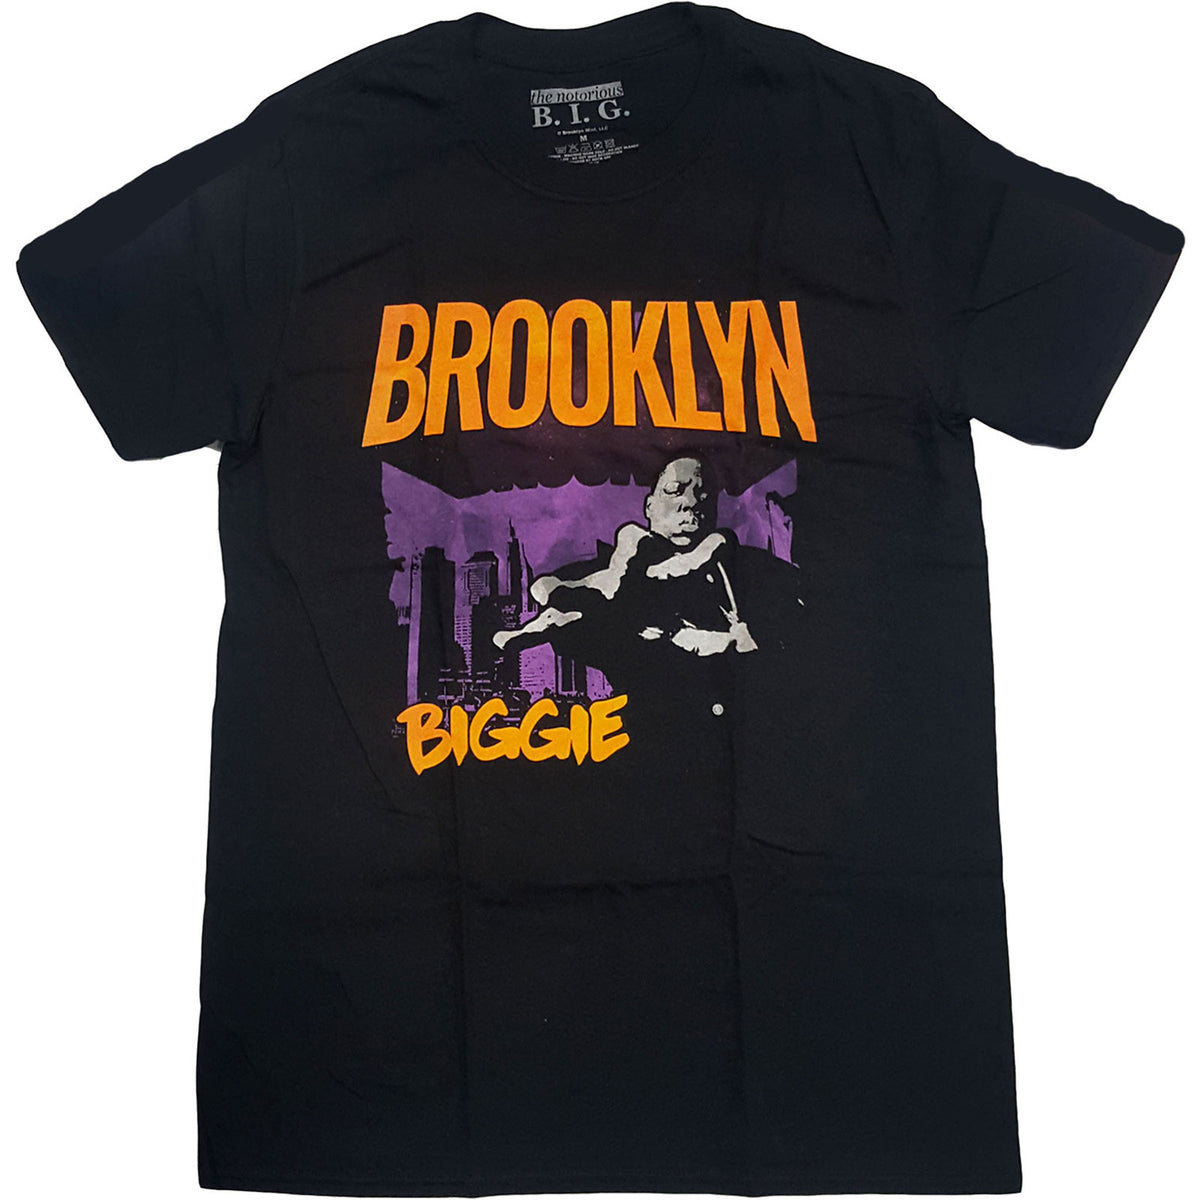 Biggie Smalls Adult T-Shirt - Brooklyn Orange - Official Licensed Design